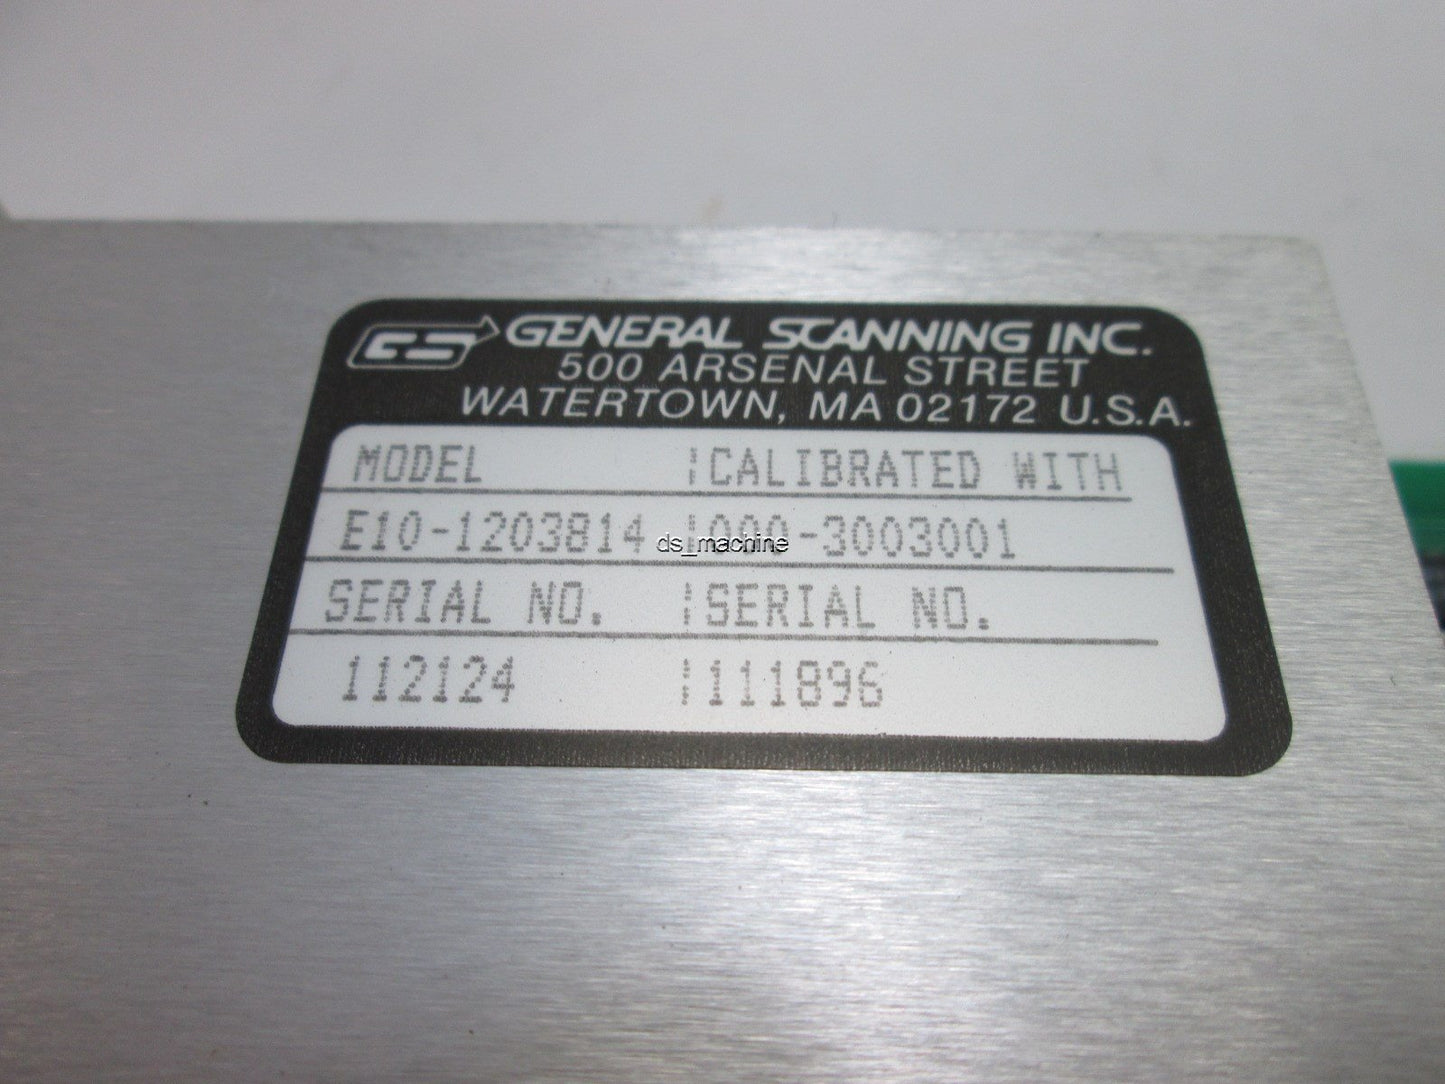 Used General Scanning E10-1203814 000-3003001 X-Servo Board